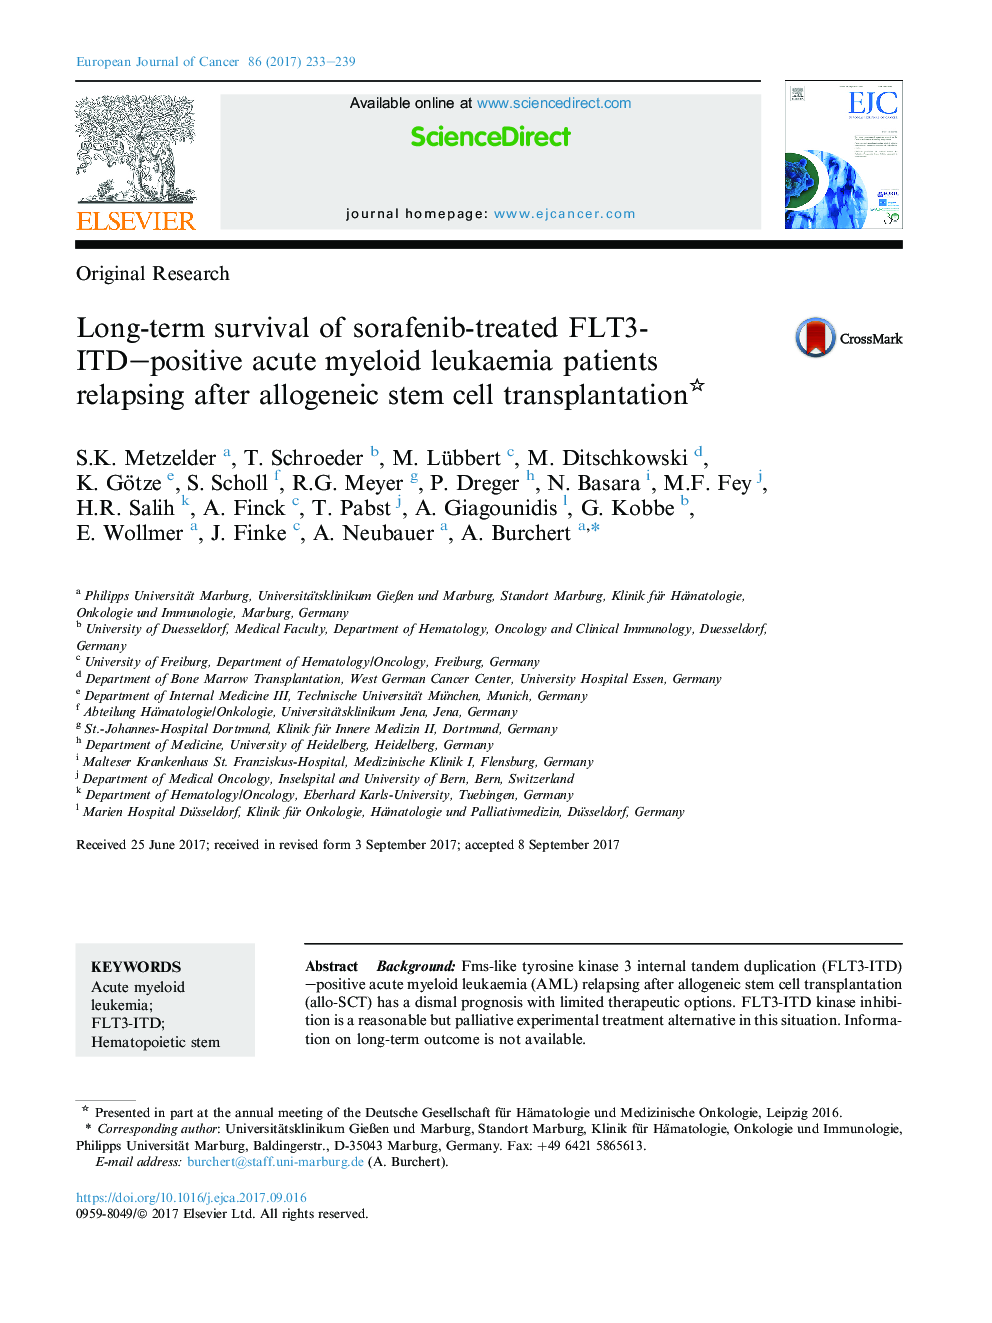 Original ResearchLong-term survival of sorafenib-treated FLT3-ITD-positive acute myeloid leukaemia patients relapsingÂ after allogeneic stem cell transplantation